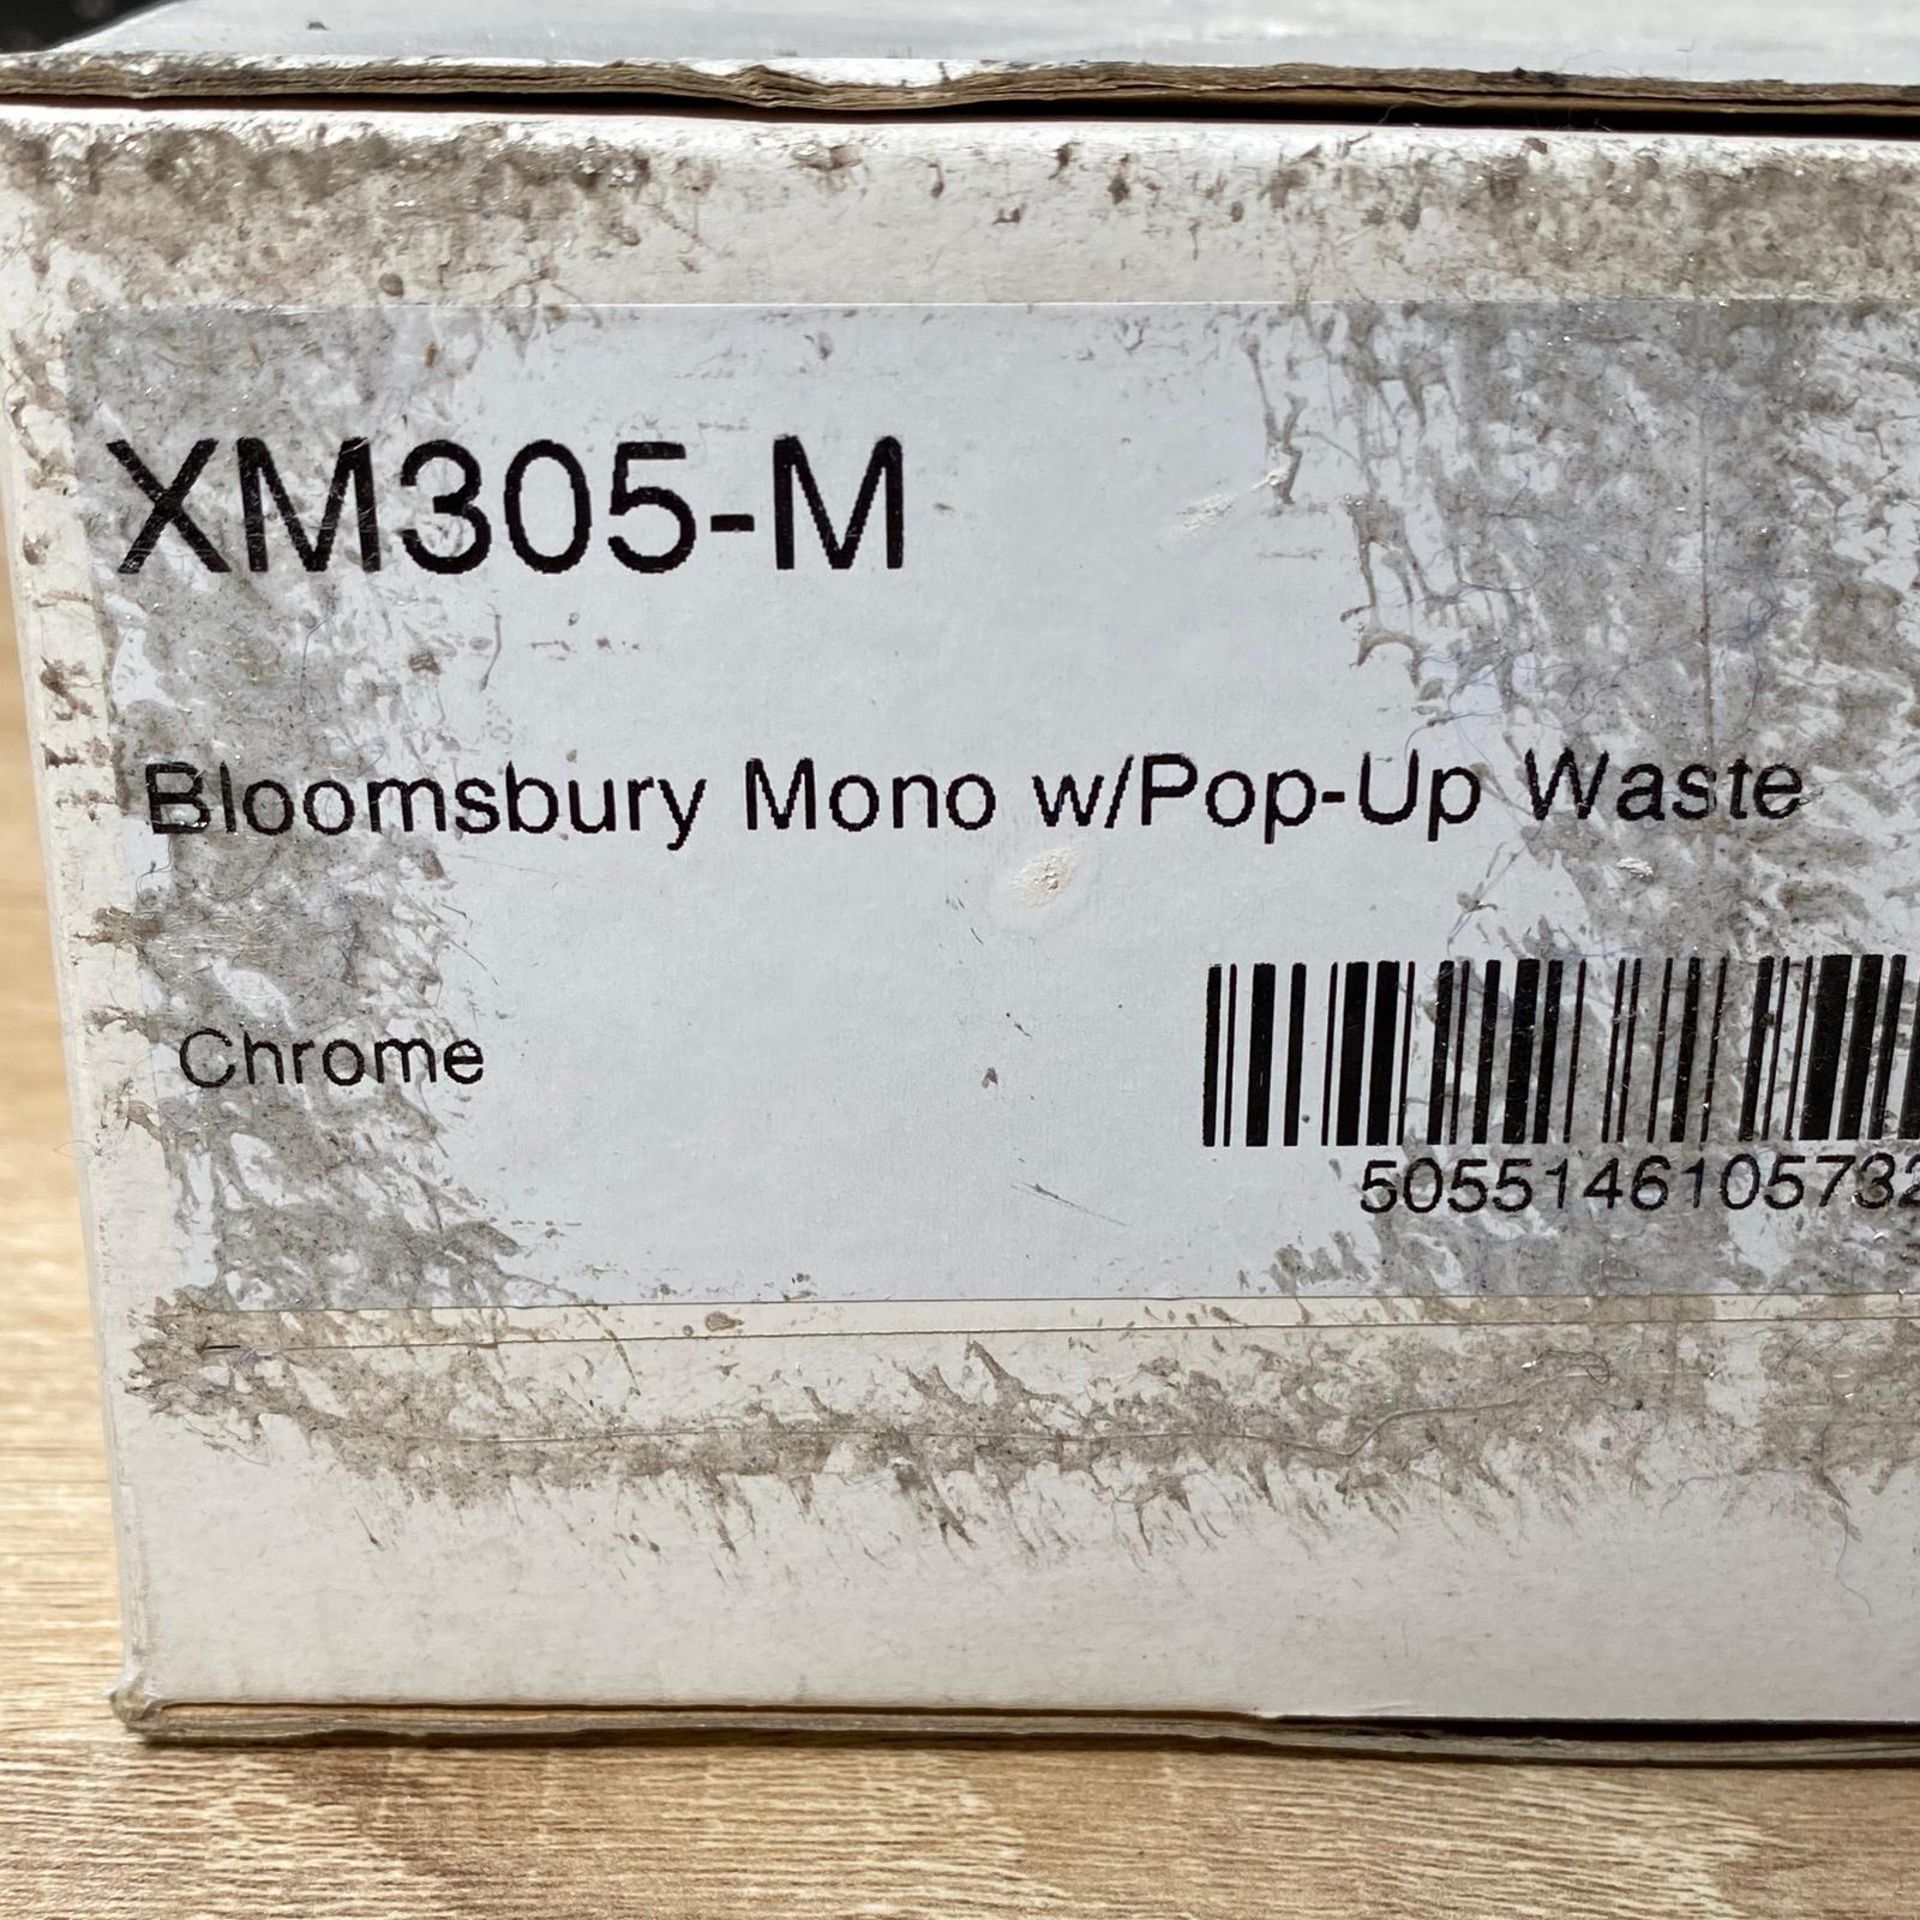 1 x Hudson Reed Bloomsbury Mono w/Pop-Up Waste - Code: XM305-M - Location: Altrincham WA14 - - Image 3 of 5